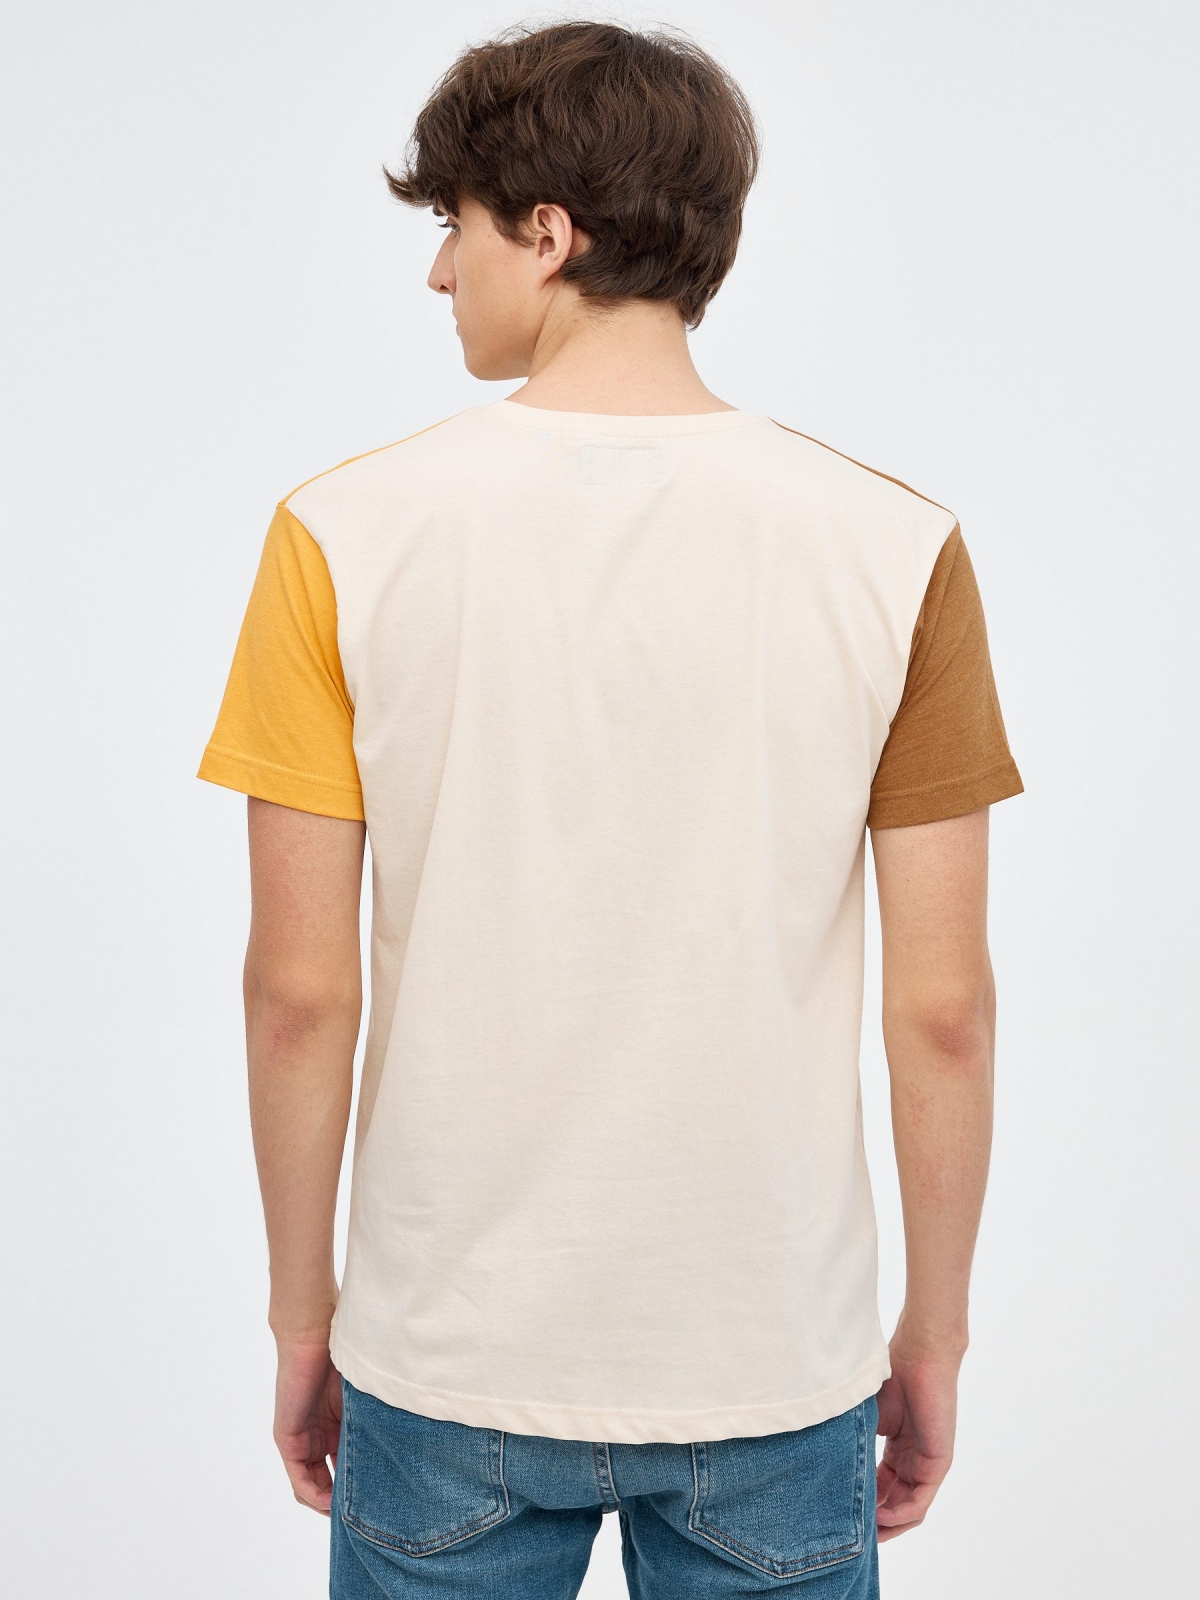 Camiseta color block tricolor arena vista media trasera